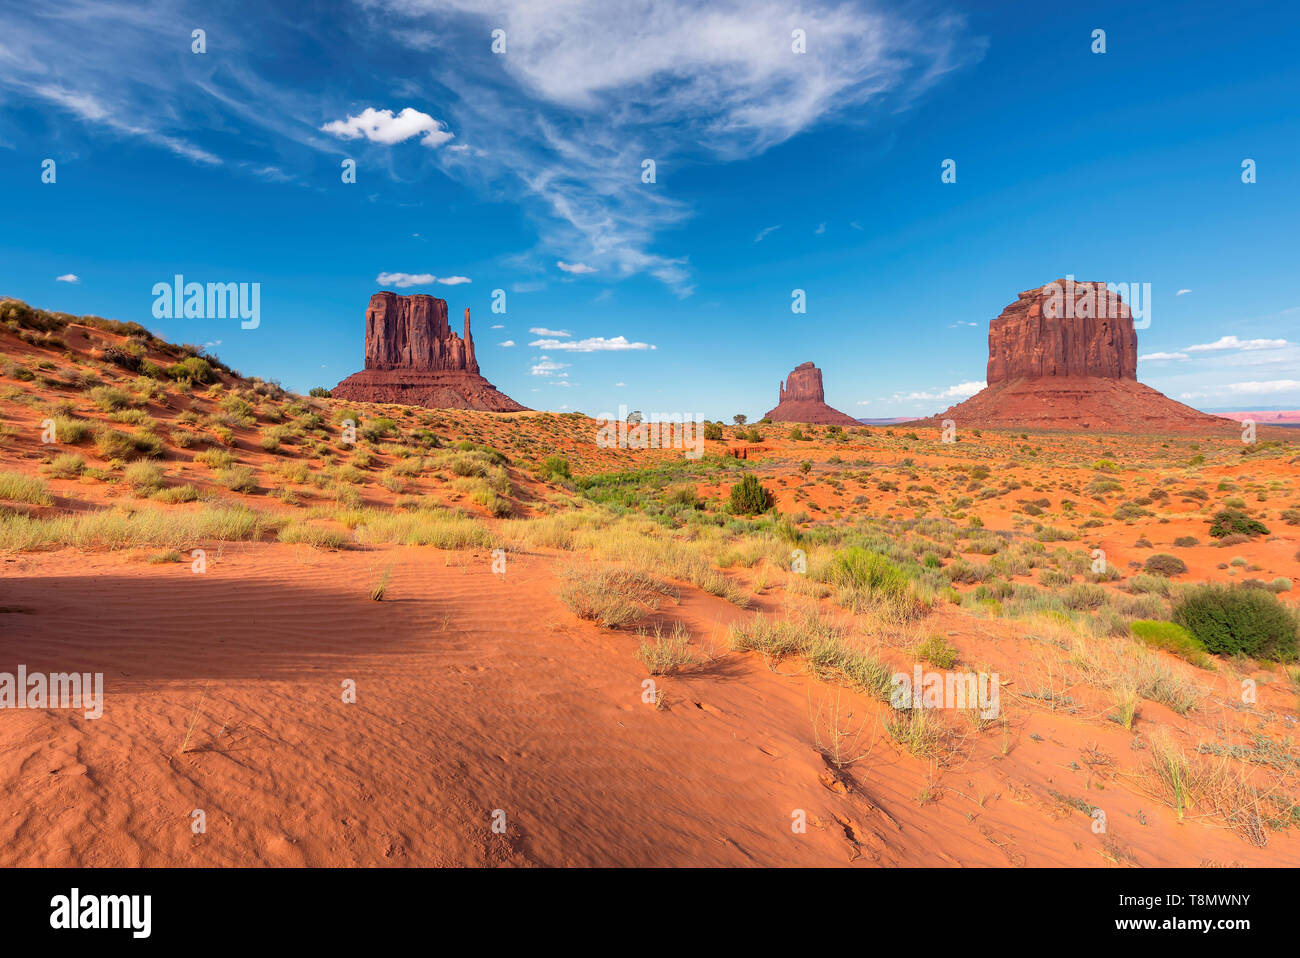 Sand dunes of desert in Monument Valley in Arizona, USA. Stock Photo